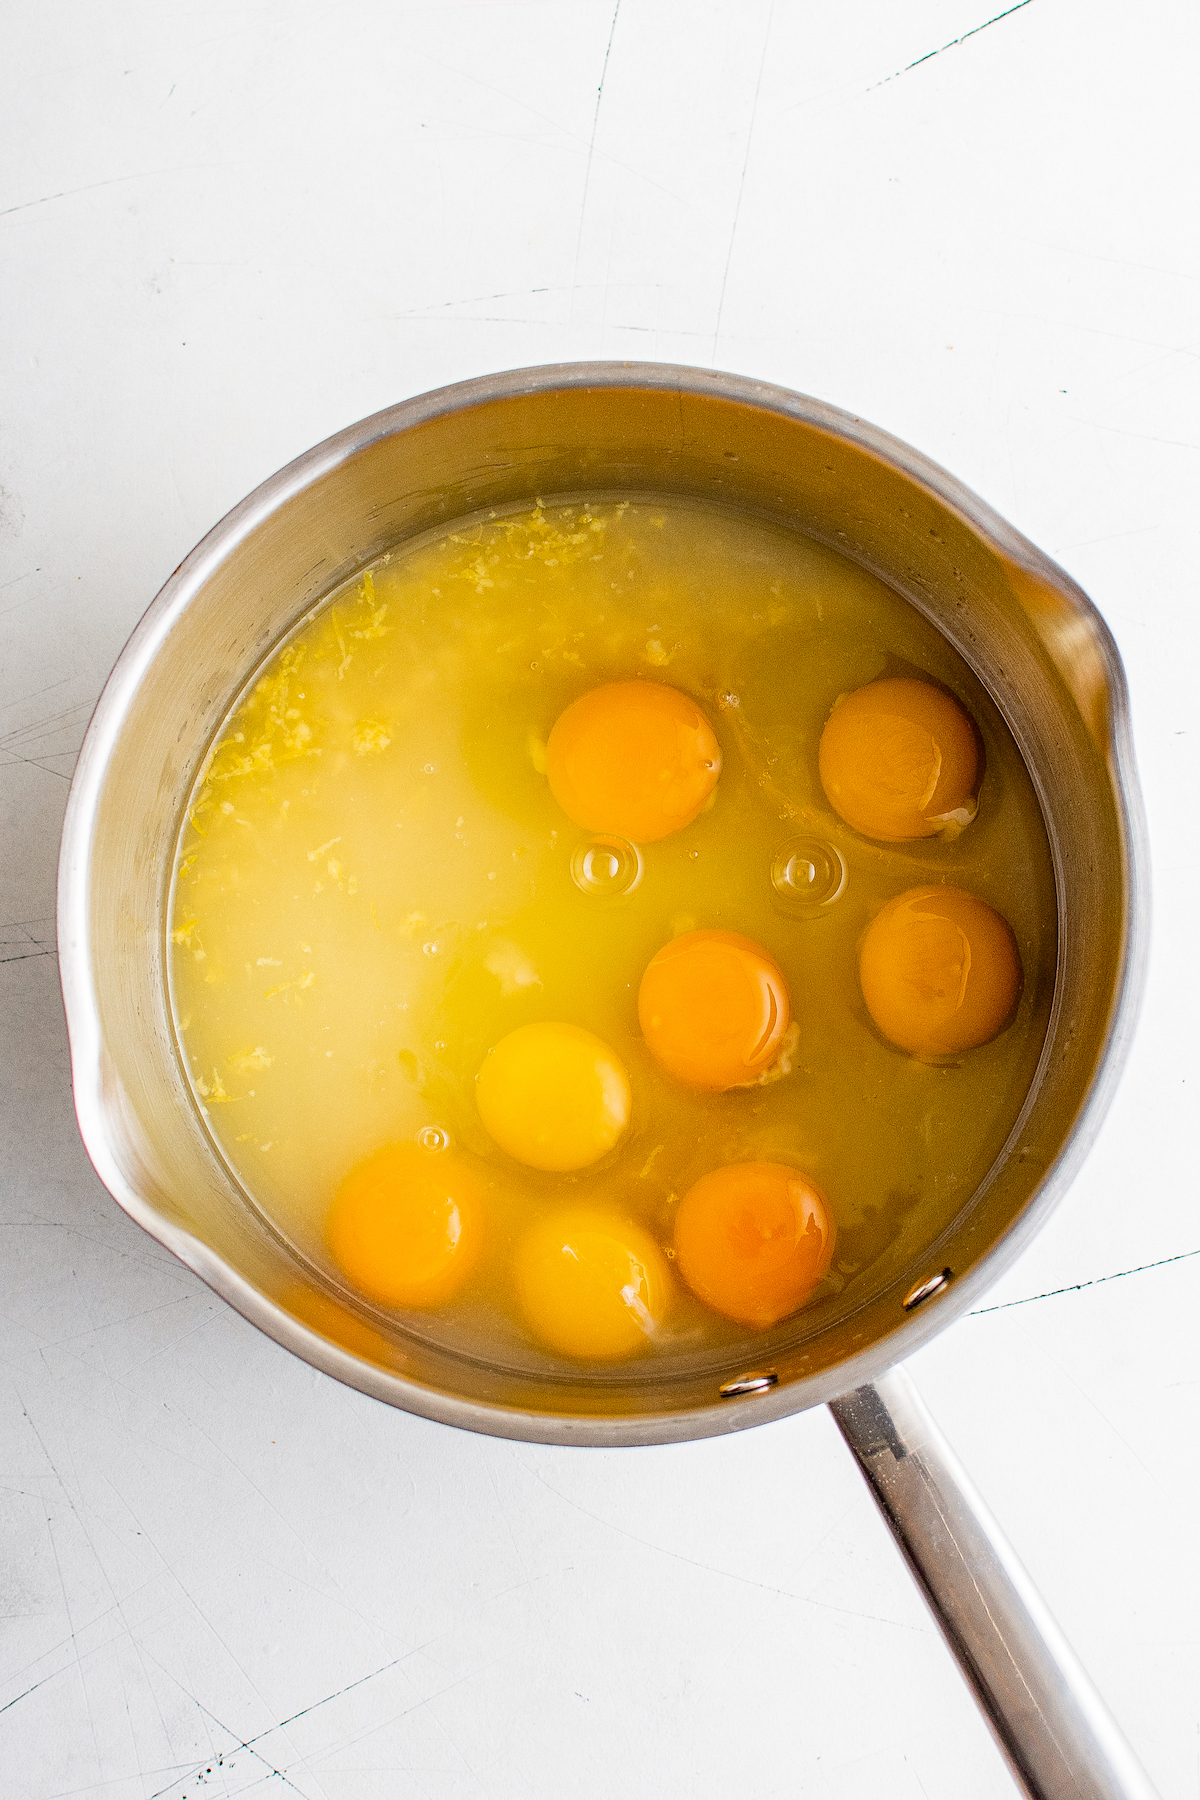 Lemon juice, zest, eggs, and sugar in a saucepan.